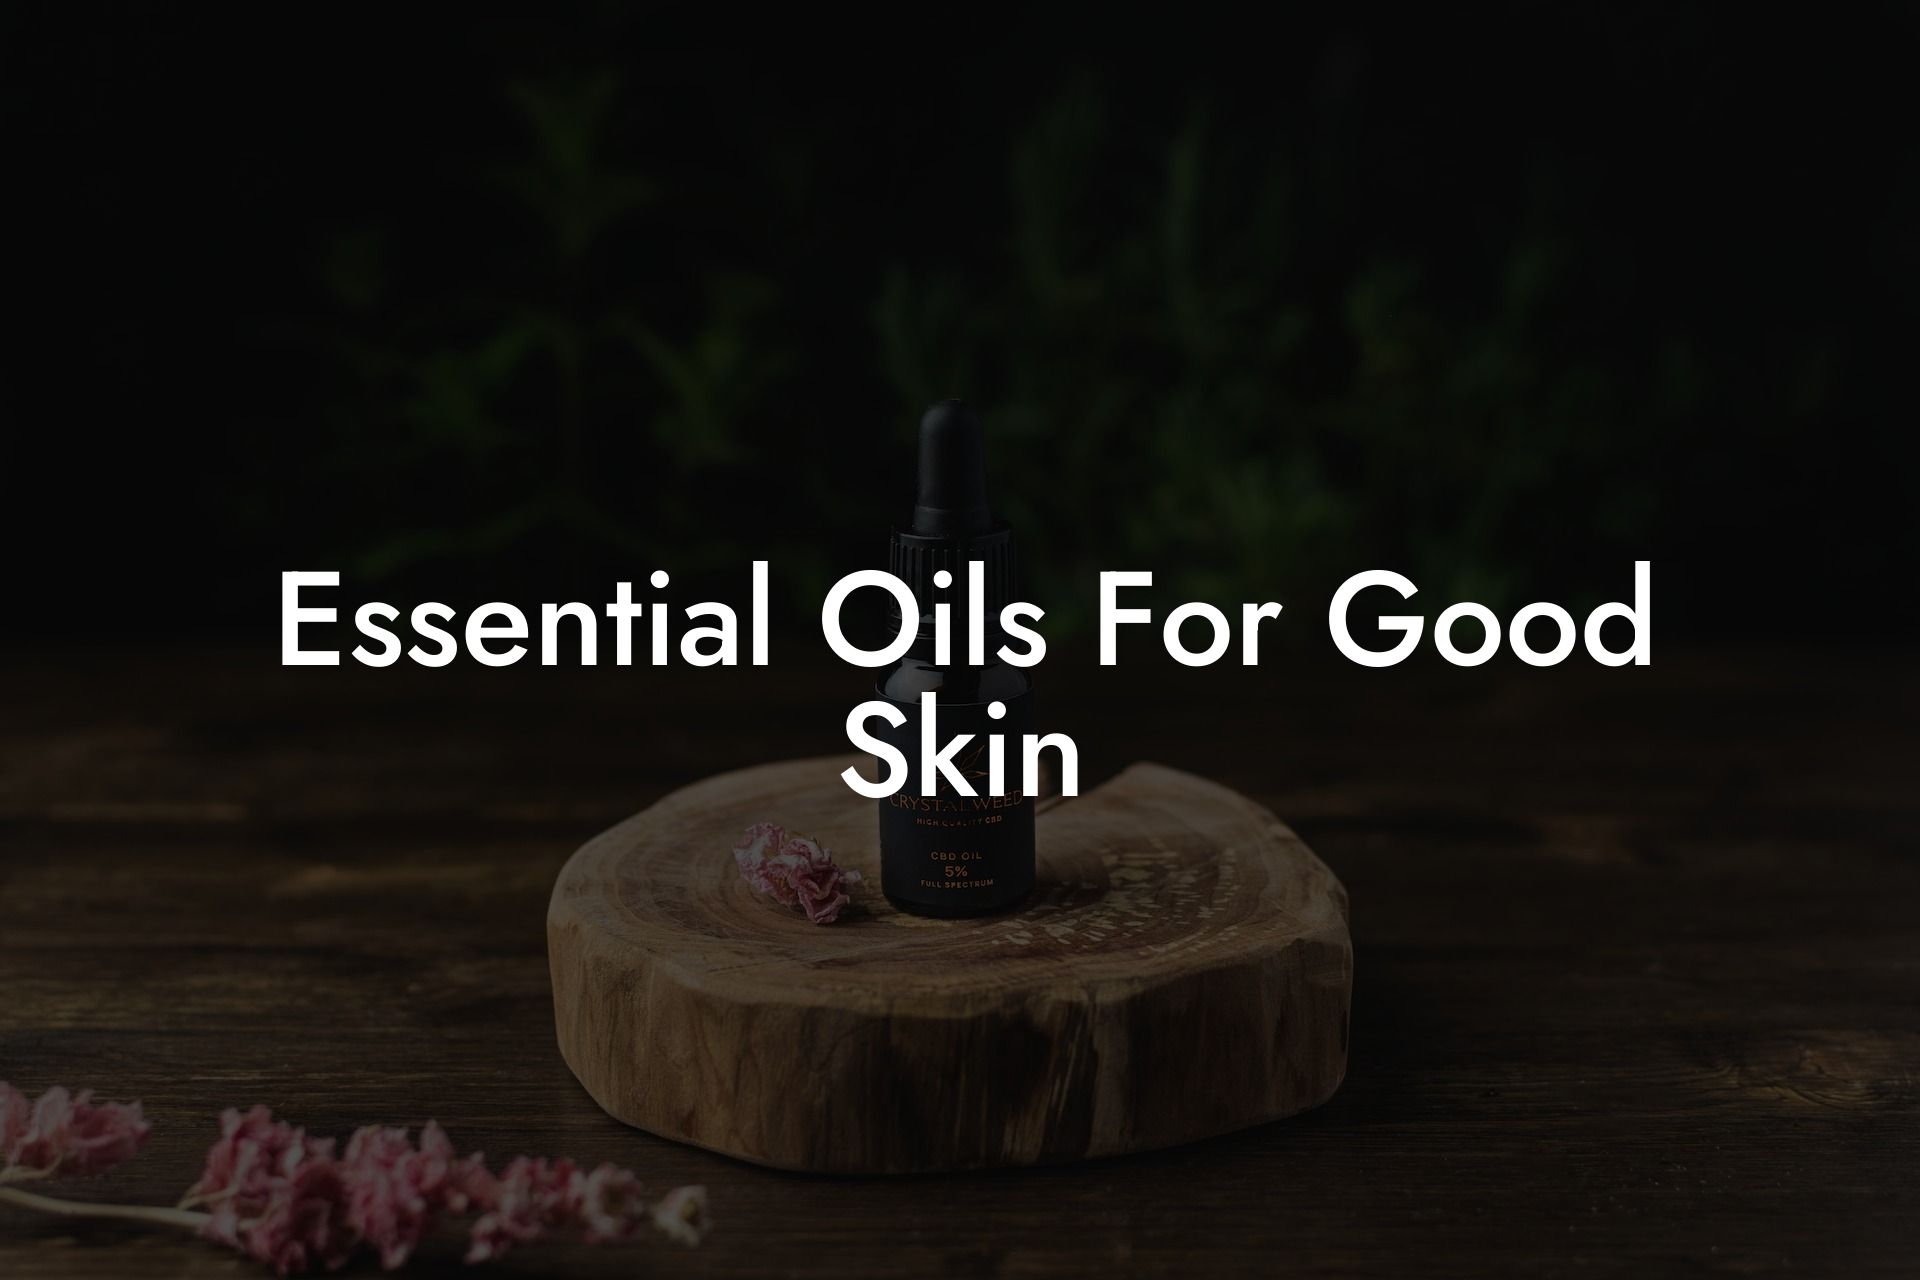 Essential Oils For Good Skin